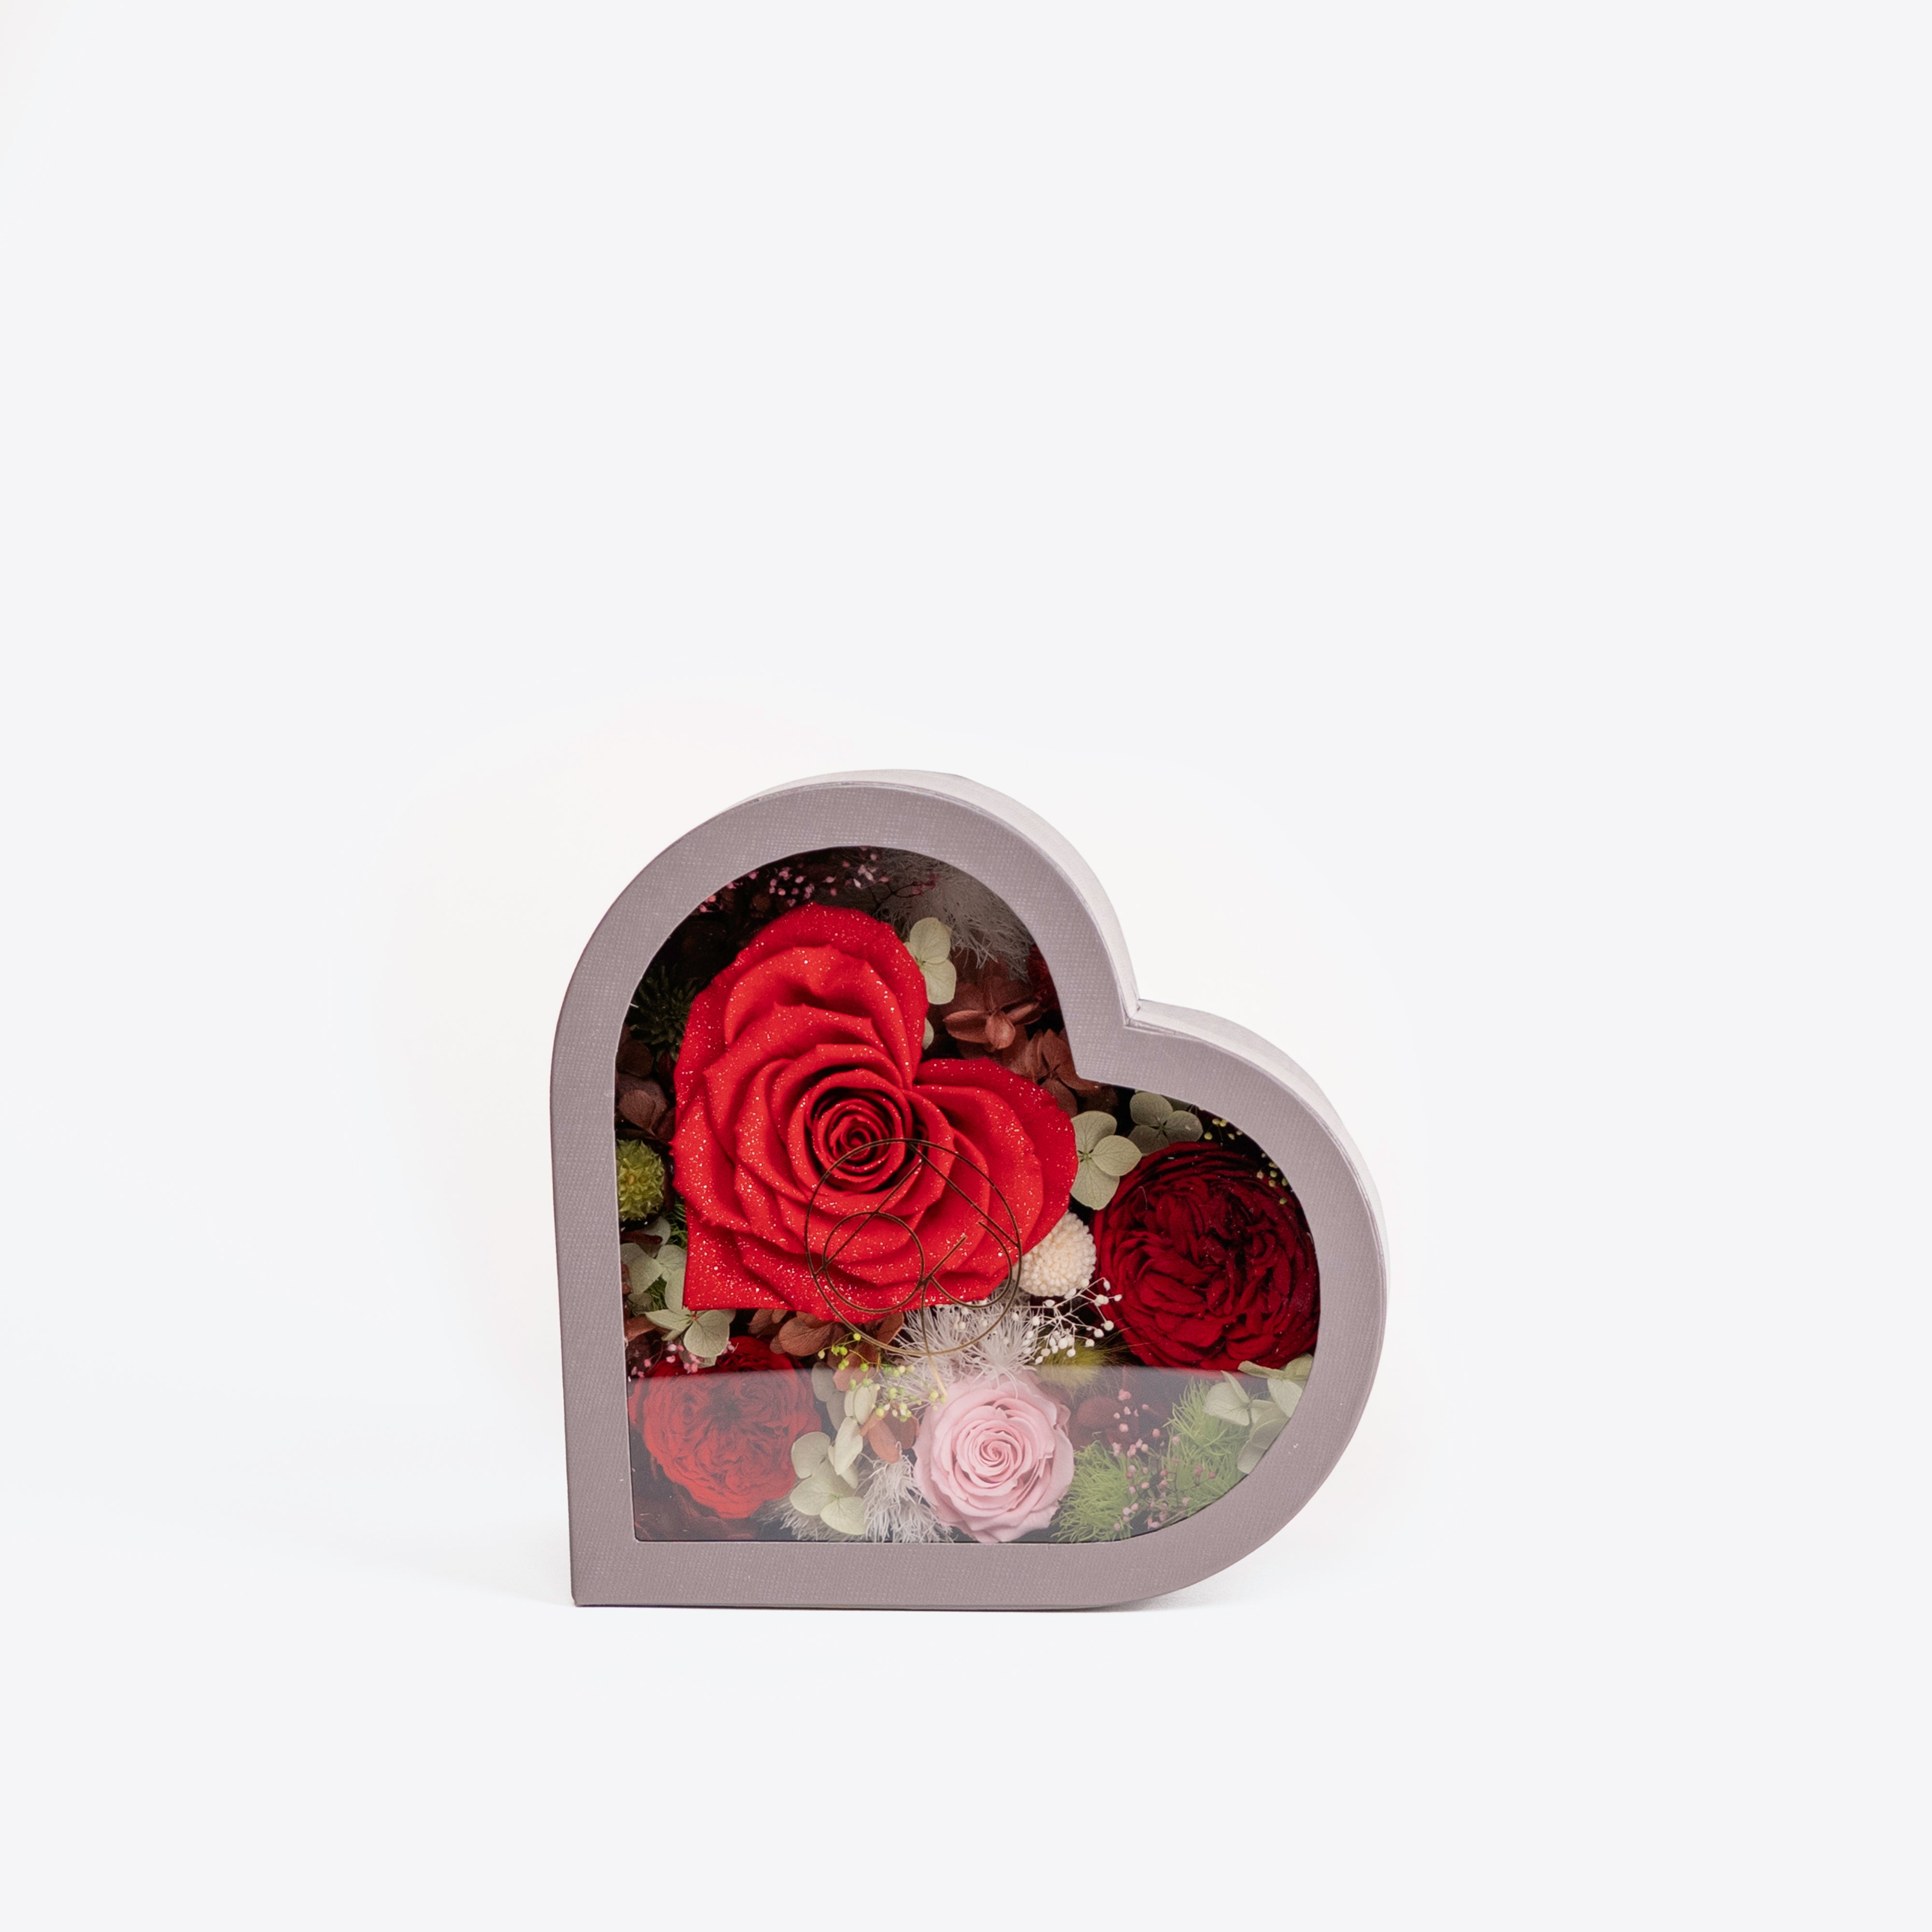 Heart Shaped Gift Boxes for Preserved Roses. Custom Heart Box Design